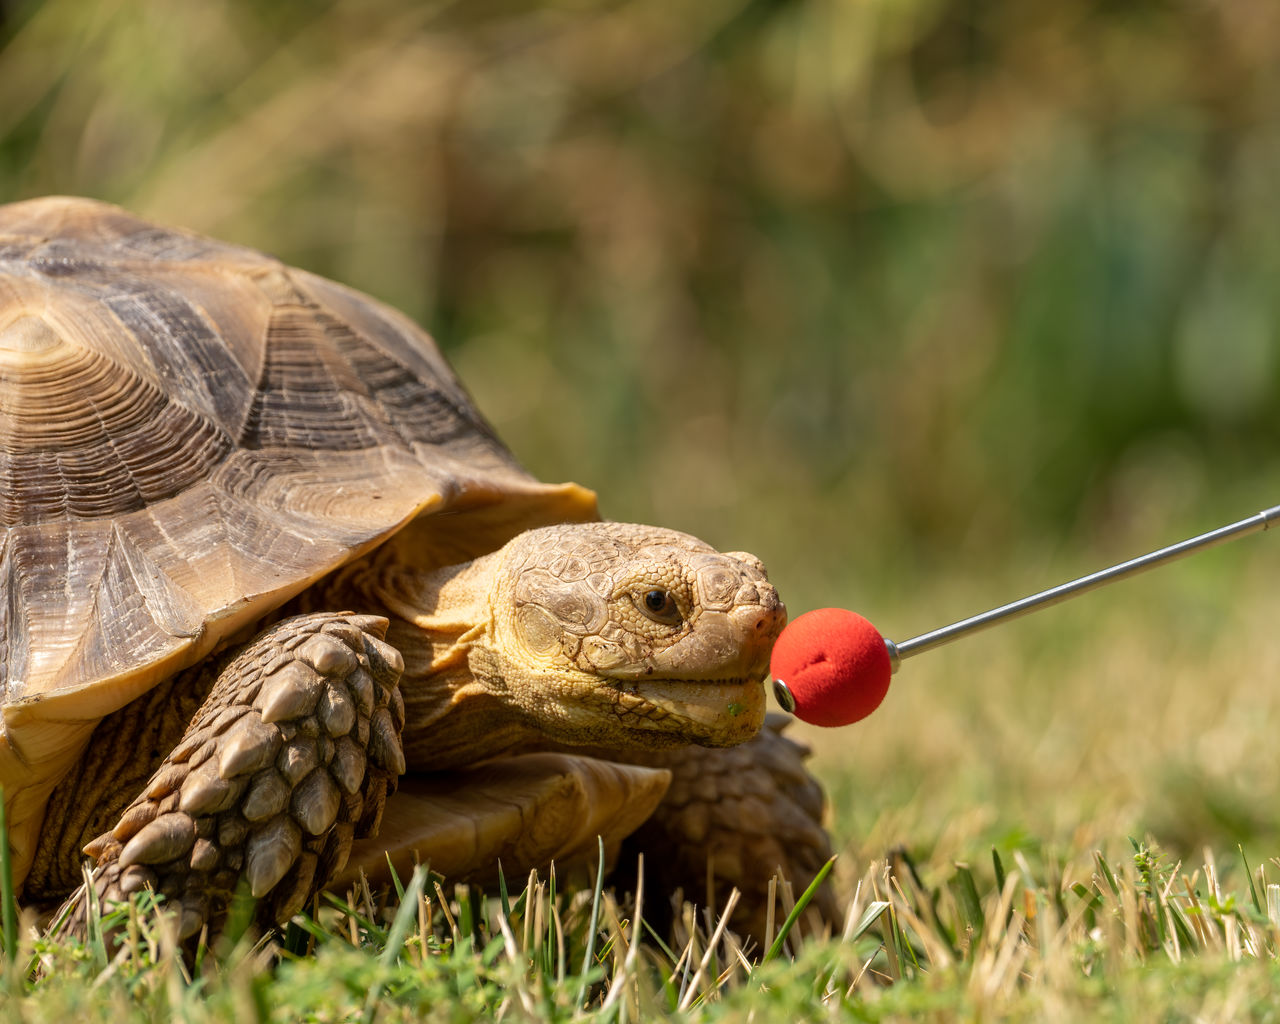 Target-training a sulcata tortoise.